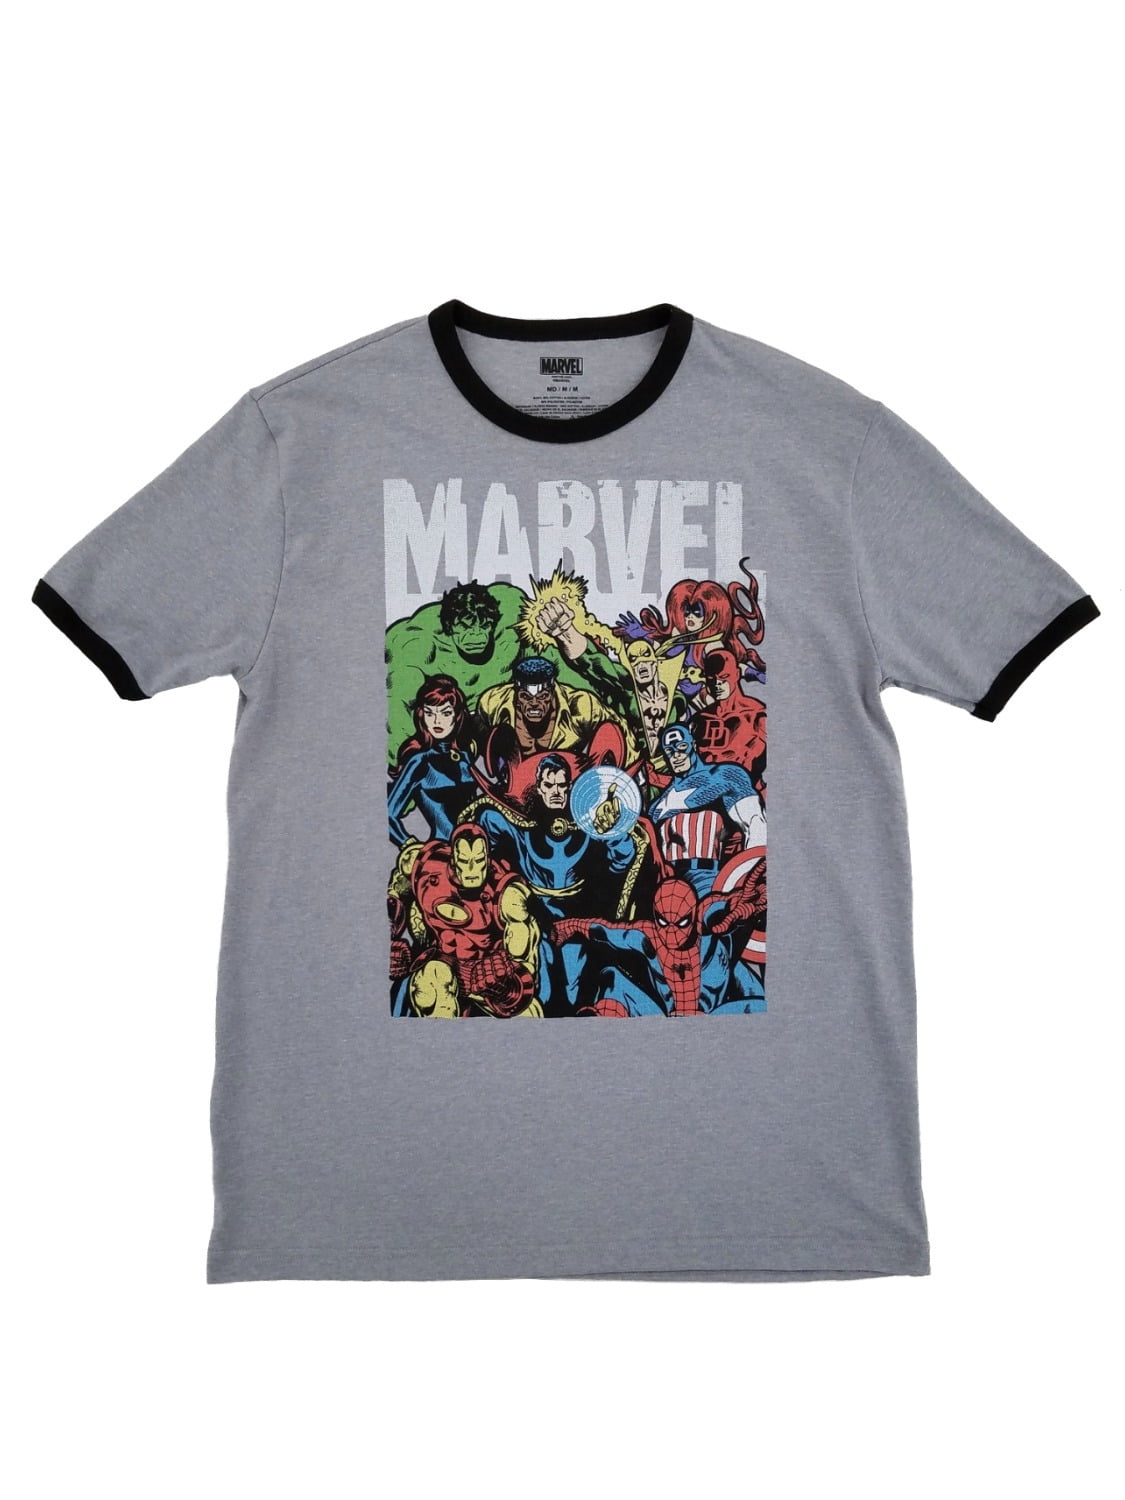 Gray Teamup Marvel Comics Superhero T-Shirt Mens Avengers Heather Small